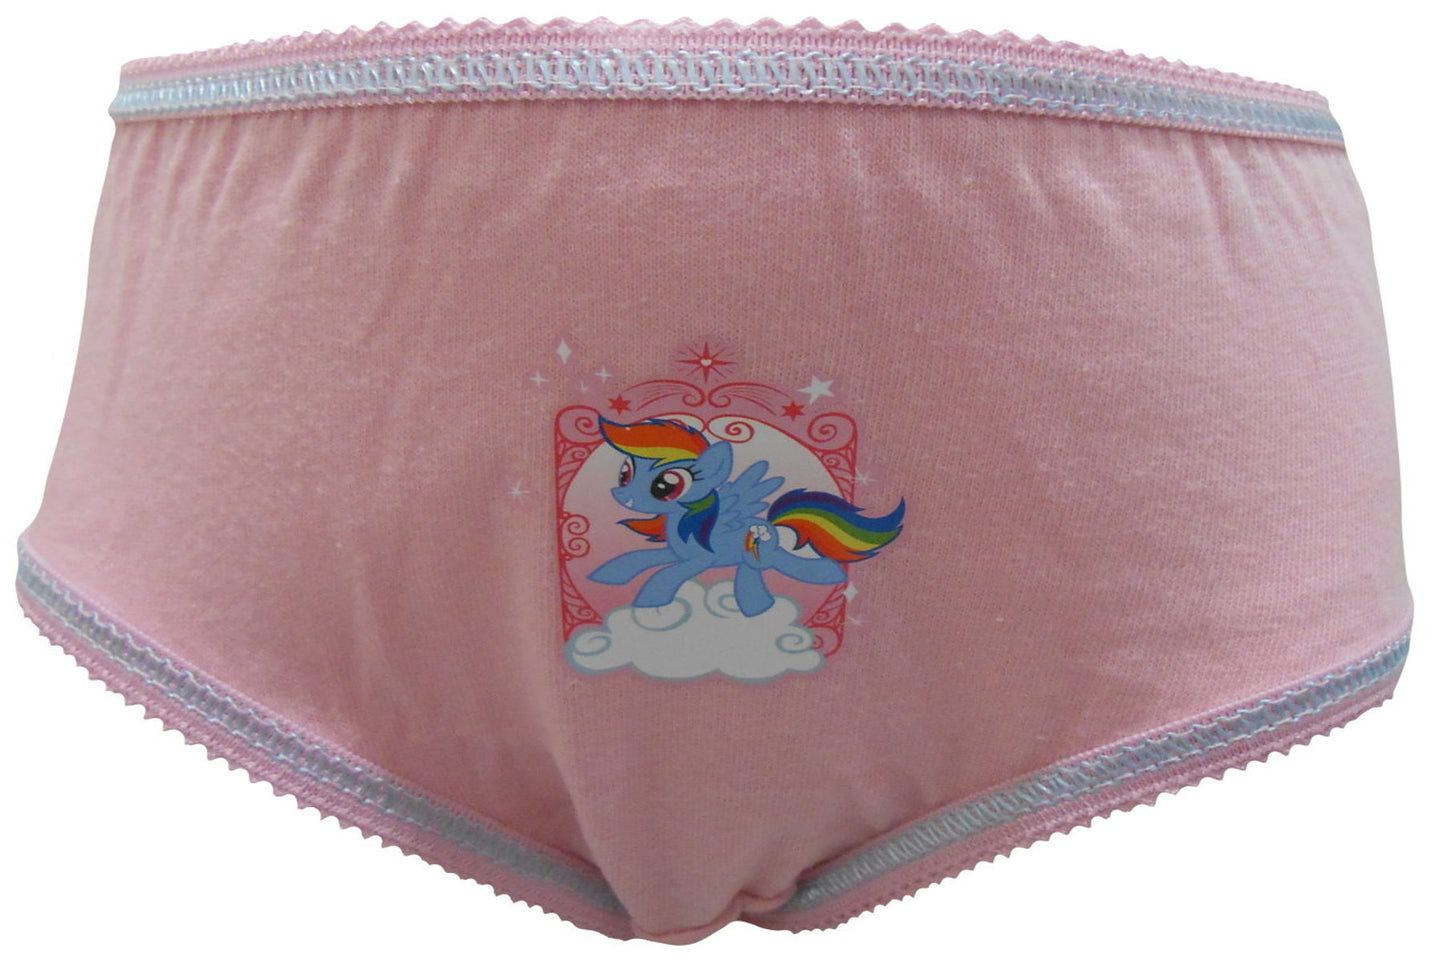 My Little Pony "Dreams" Girls 6 Pack Knickers Briefs